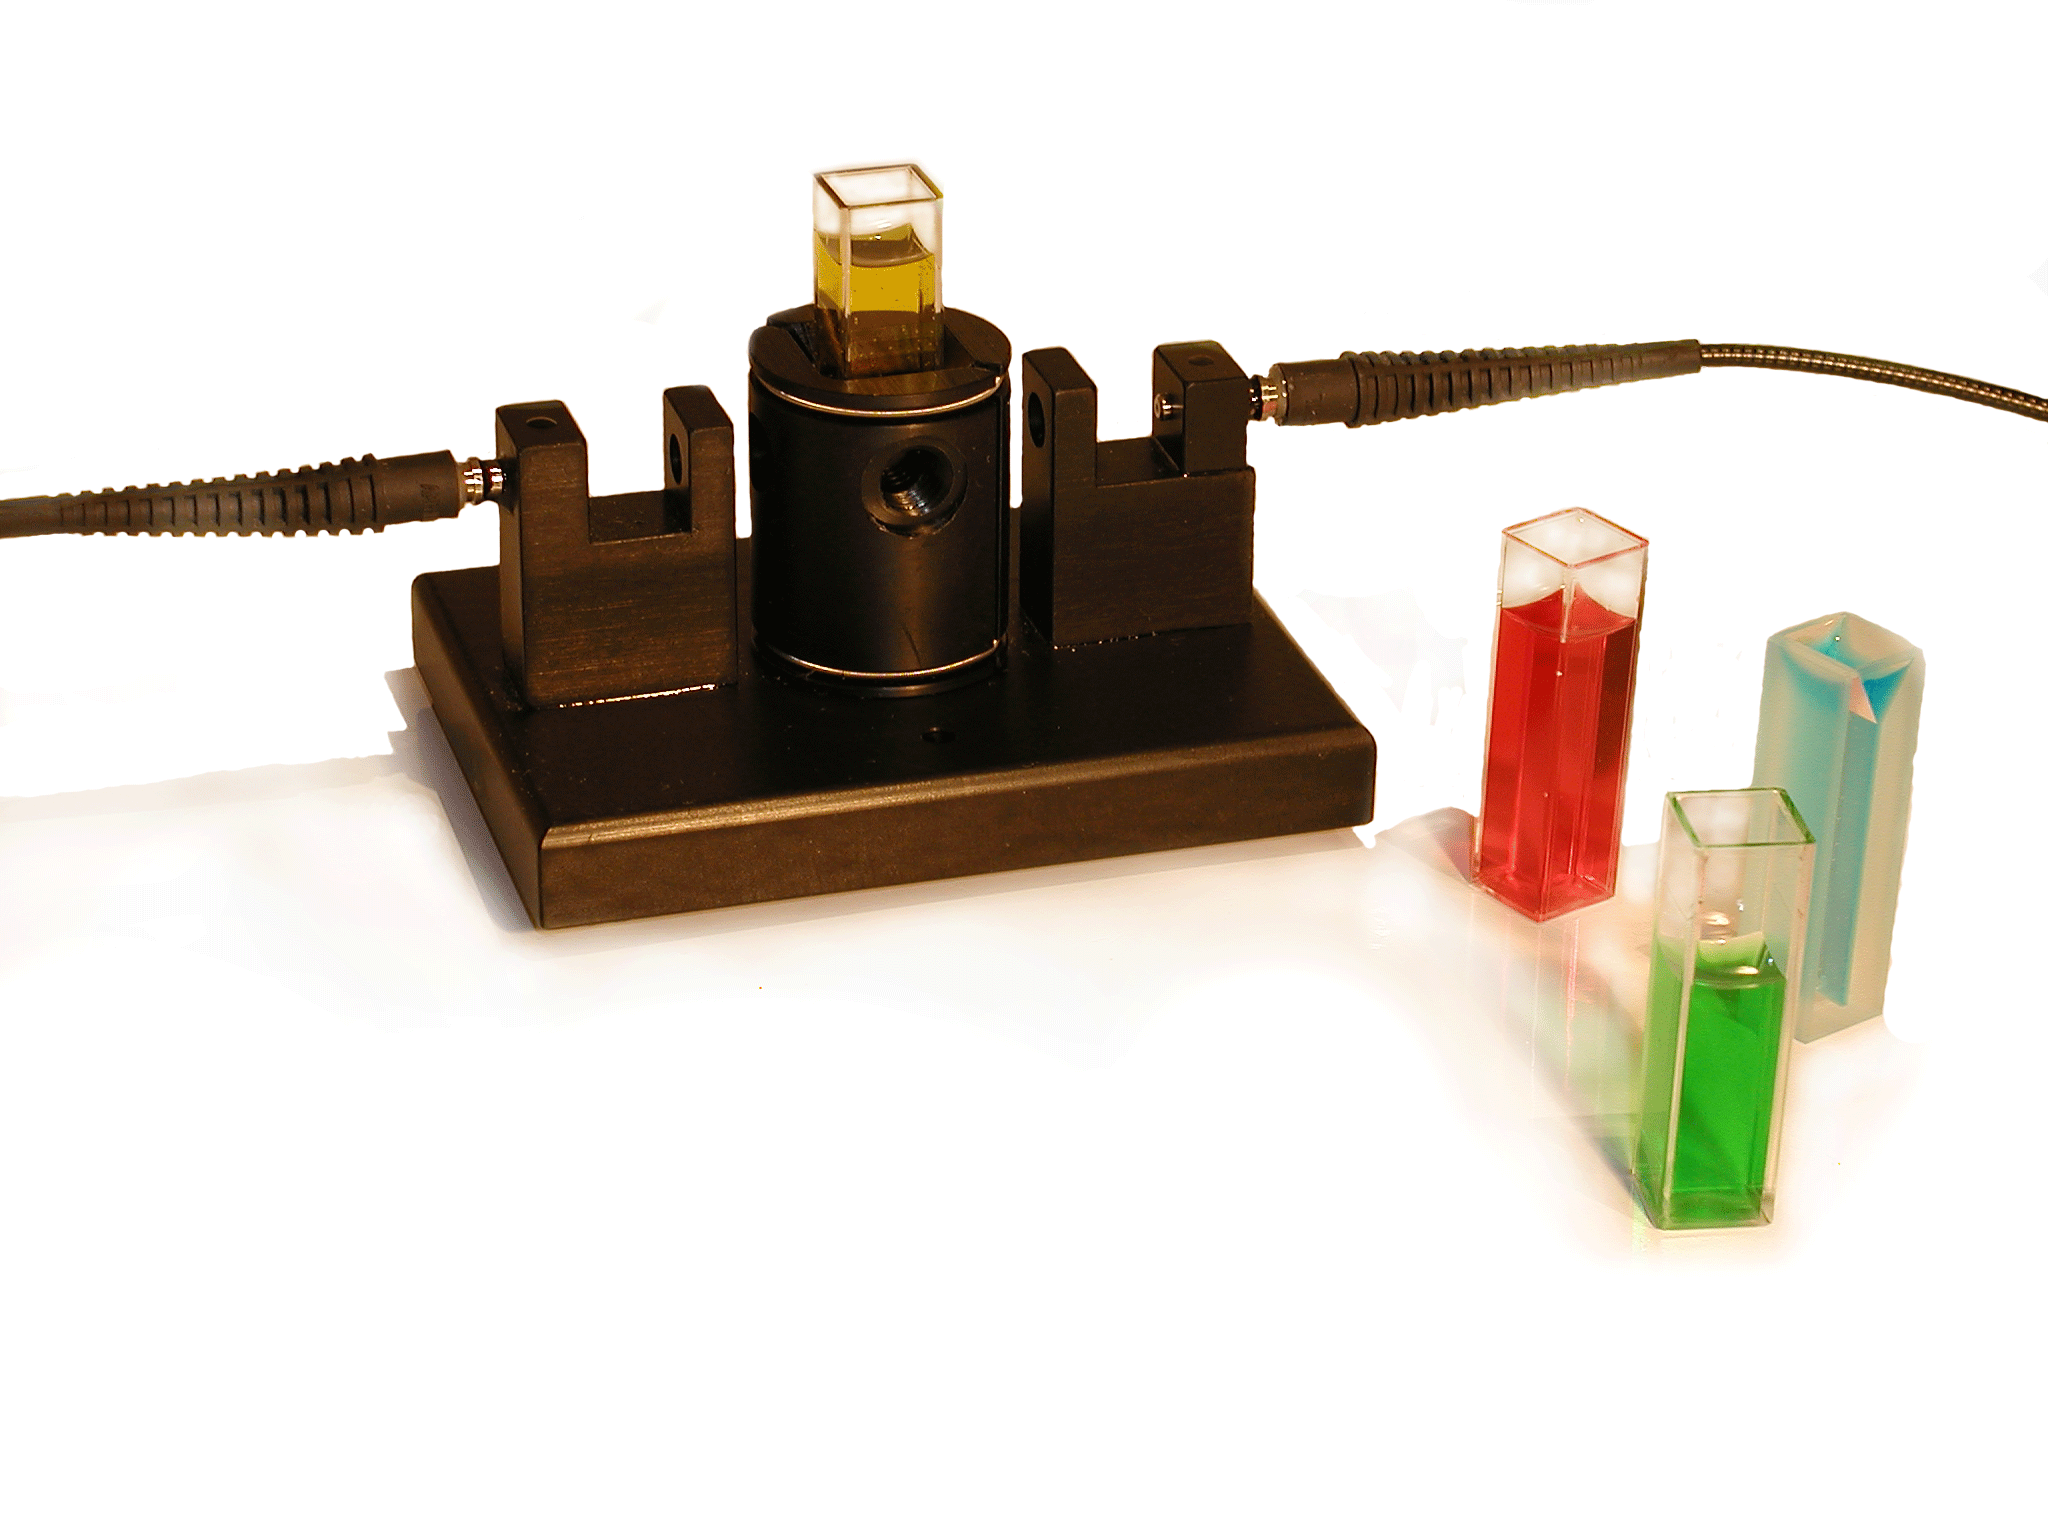 UV-Vis Universal Sampling Bench for use with UV-Vis Spectrophotometers